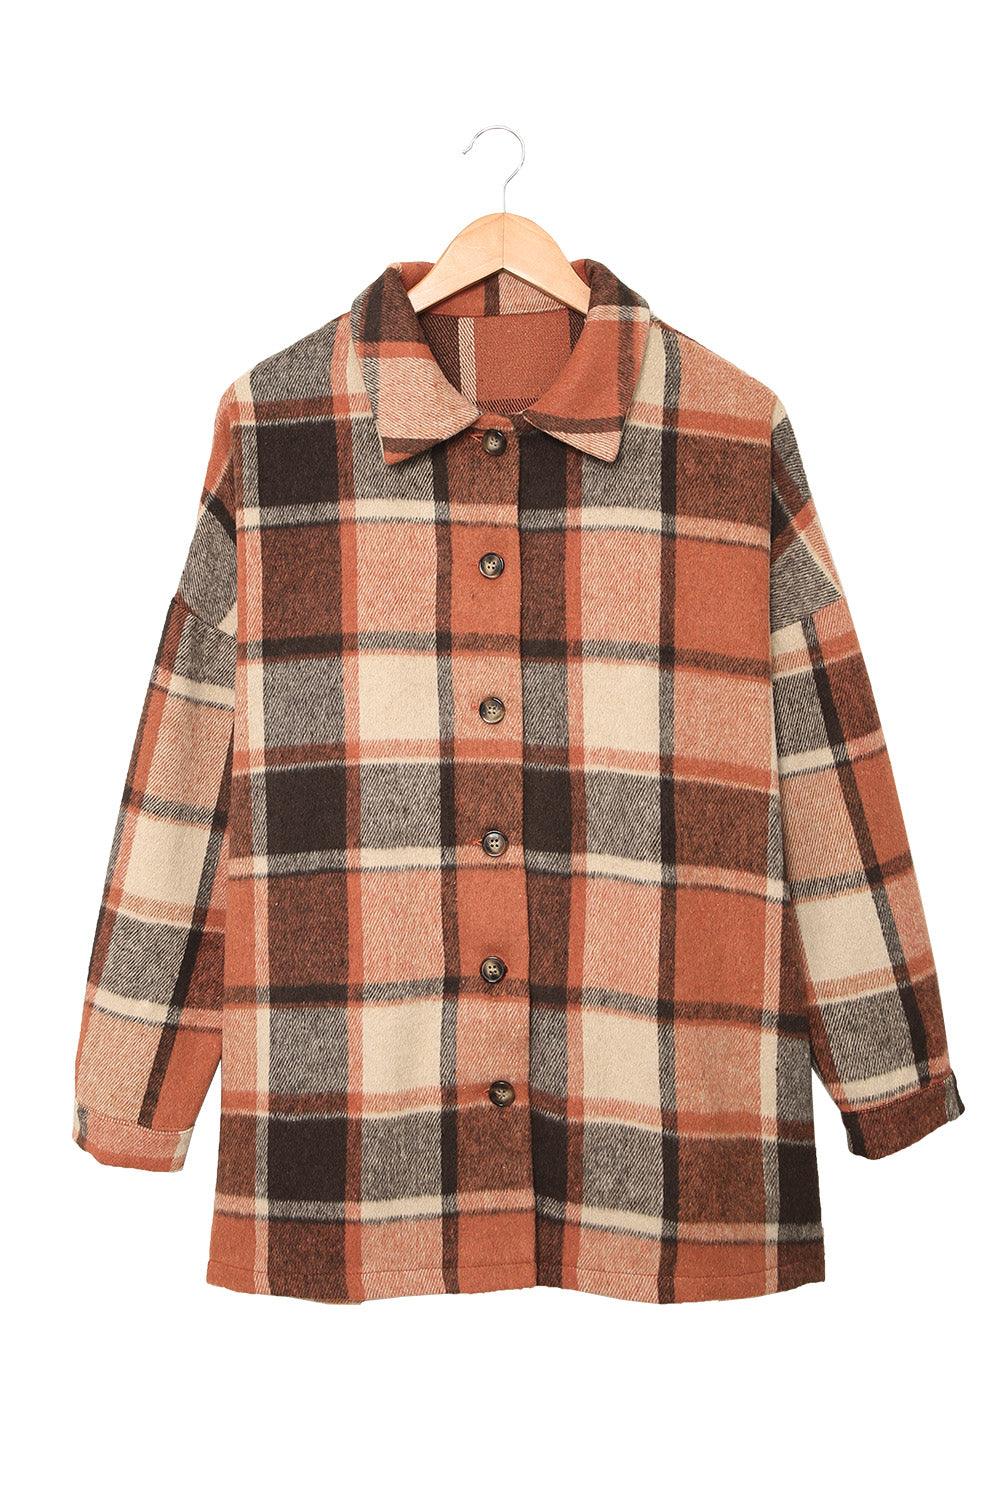 Orange Plaid Print Buttoned Shirt Jacket - L & M Kee, LLC